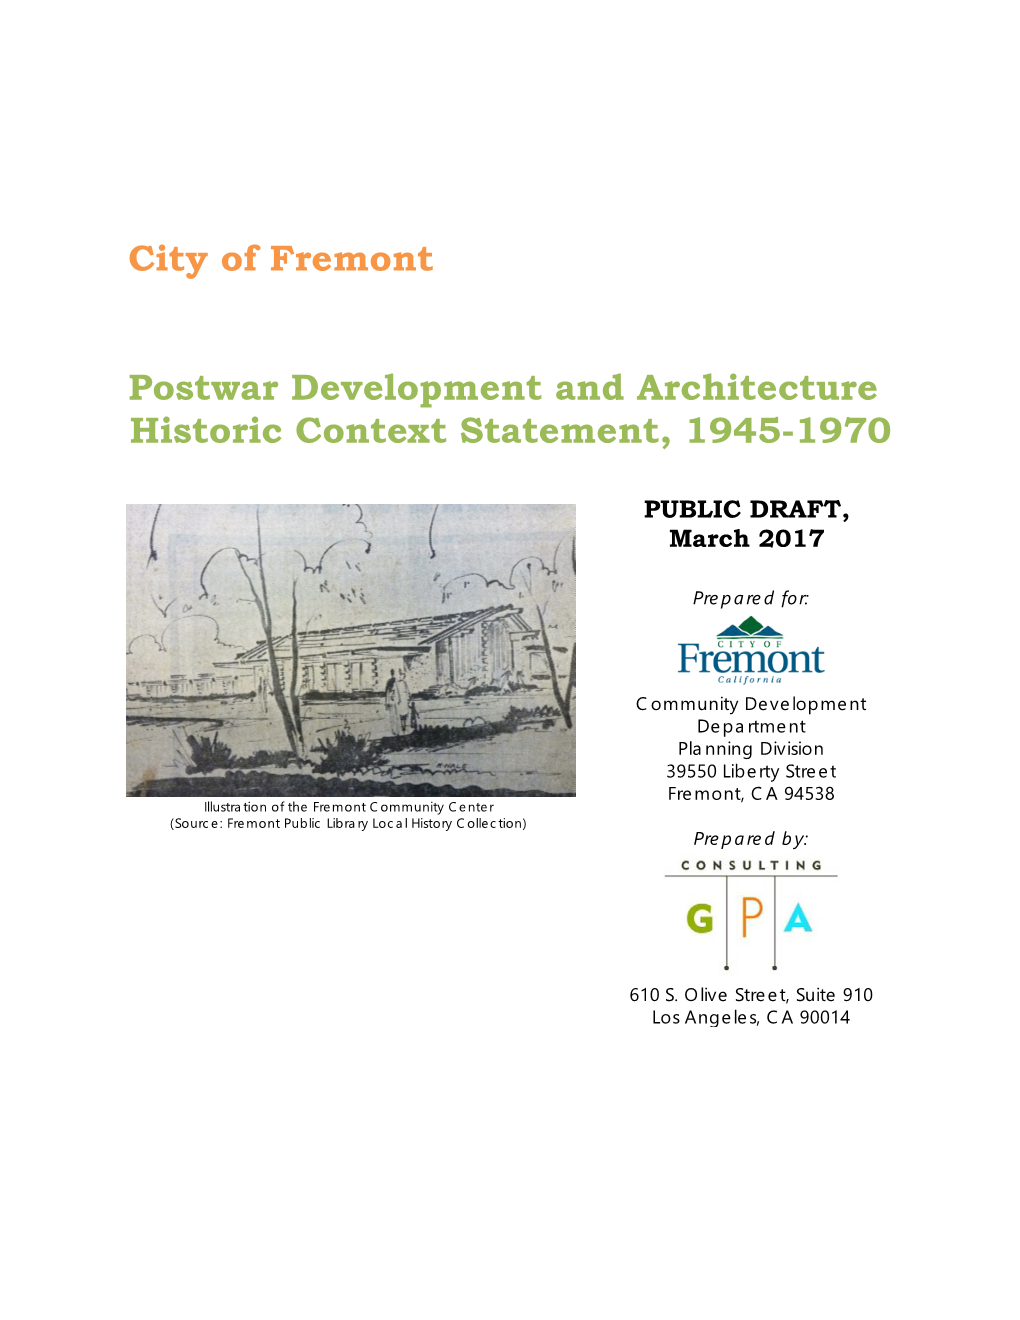 City of Fremont Postwar Development and Architecture Historic Context